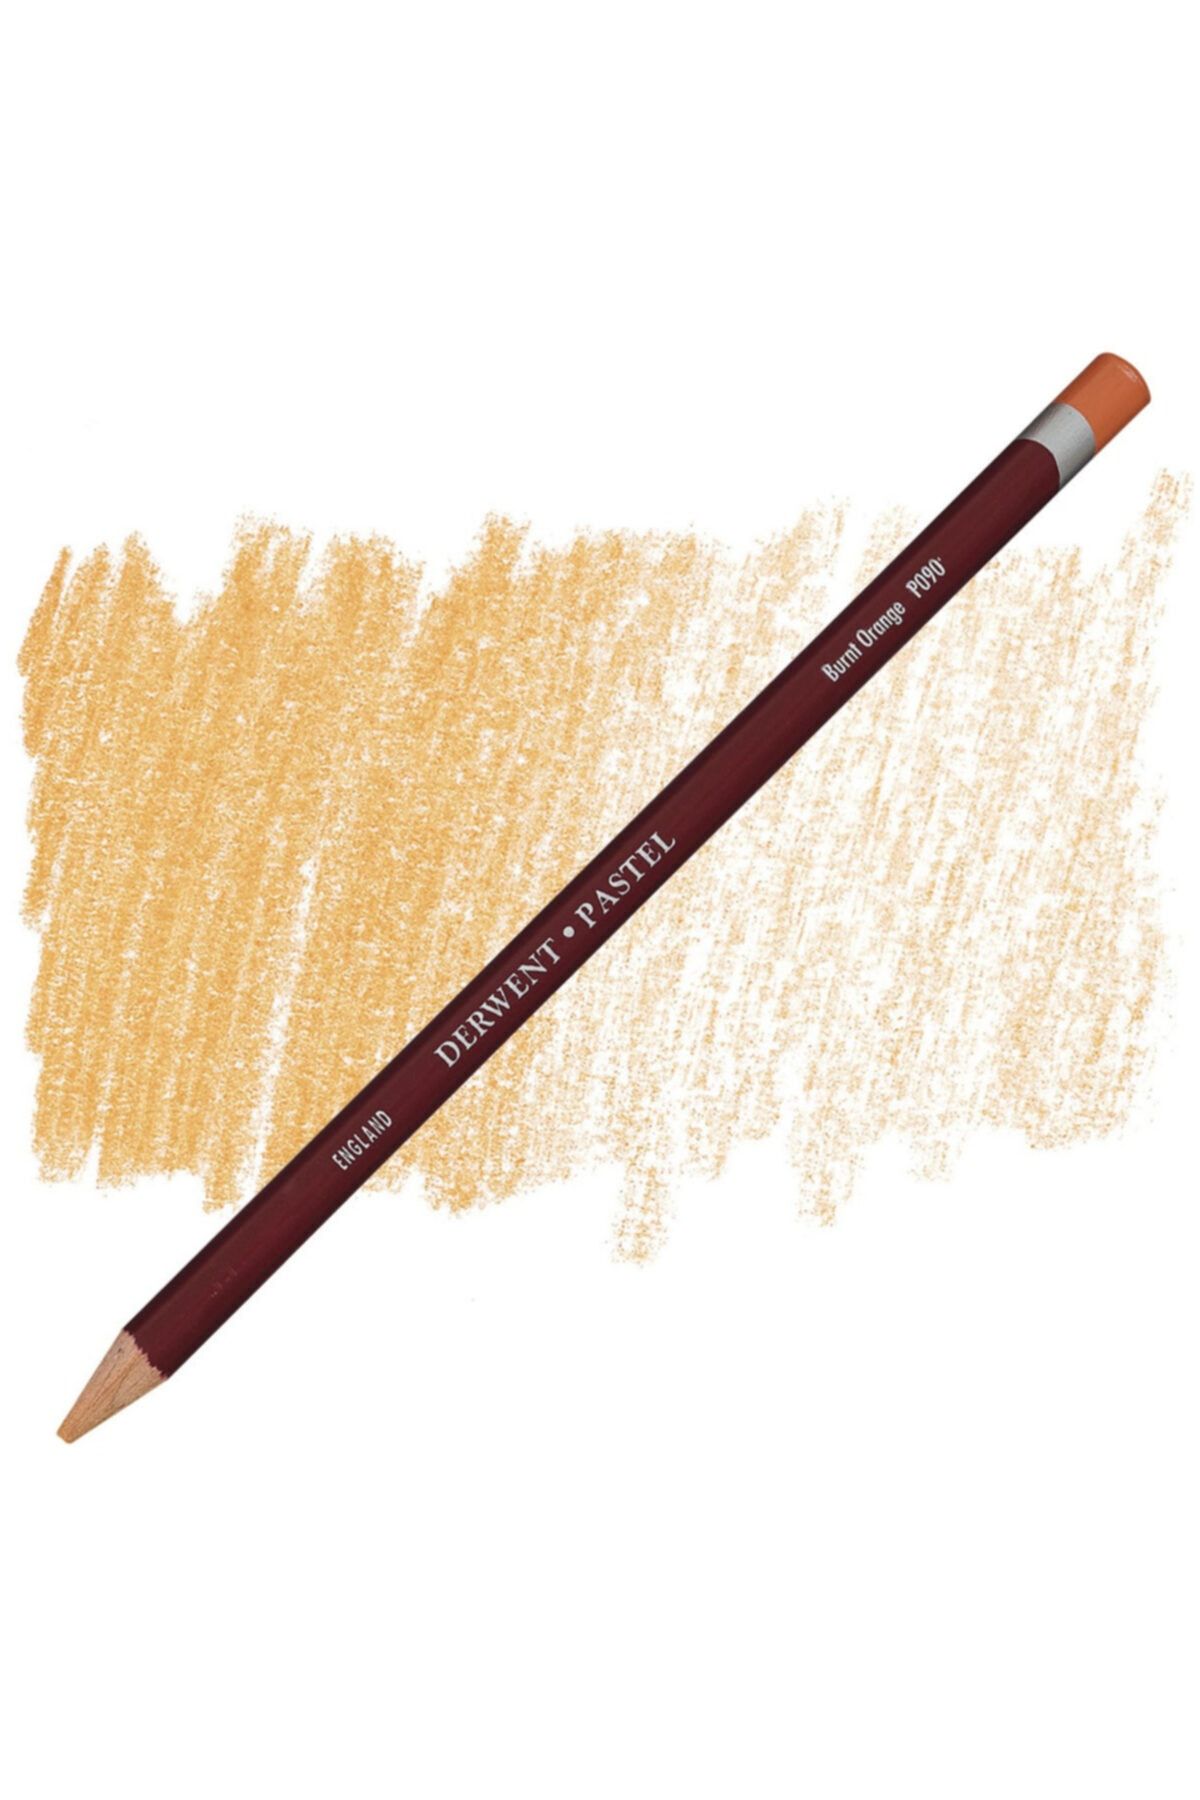 Derwent Pastel Pencil P090 Burnt Orange